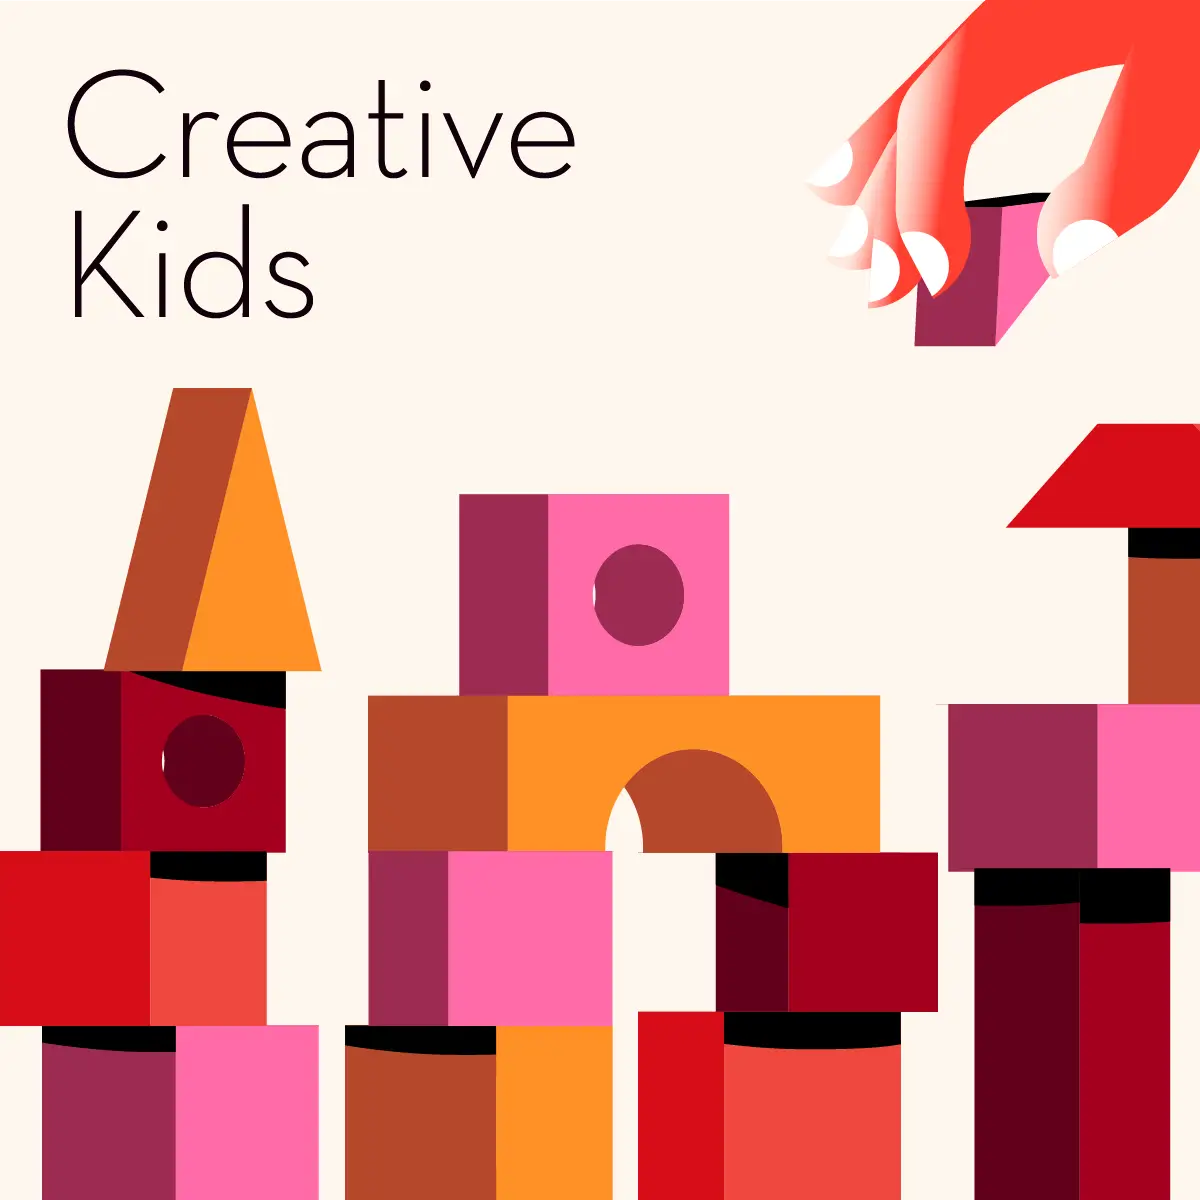 Montessori Gifts for Creative Kids